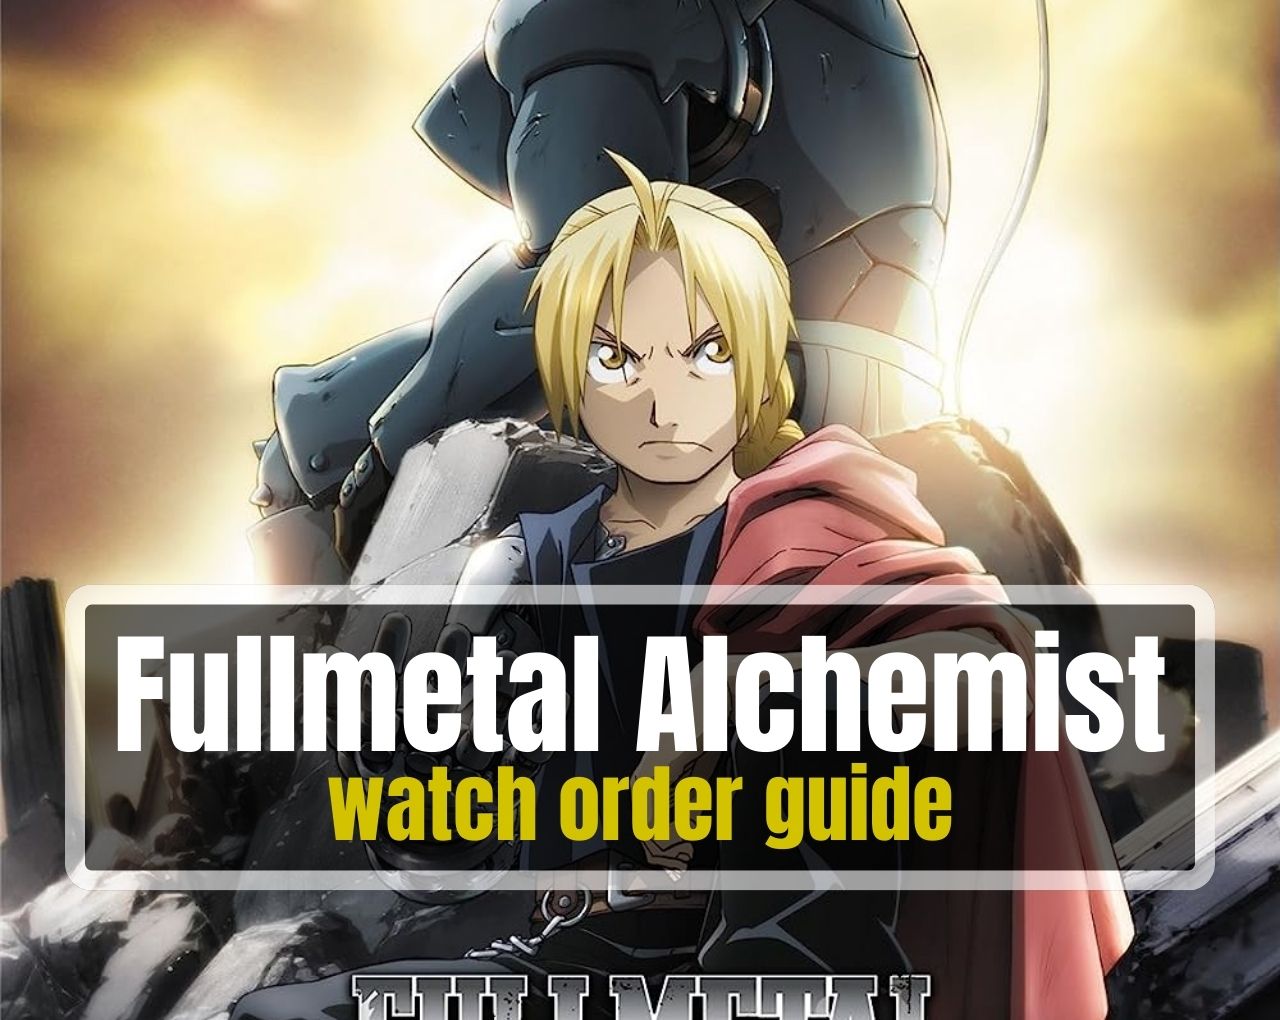 Fullmetal Alchemist watch order guide